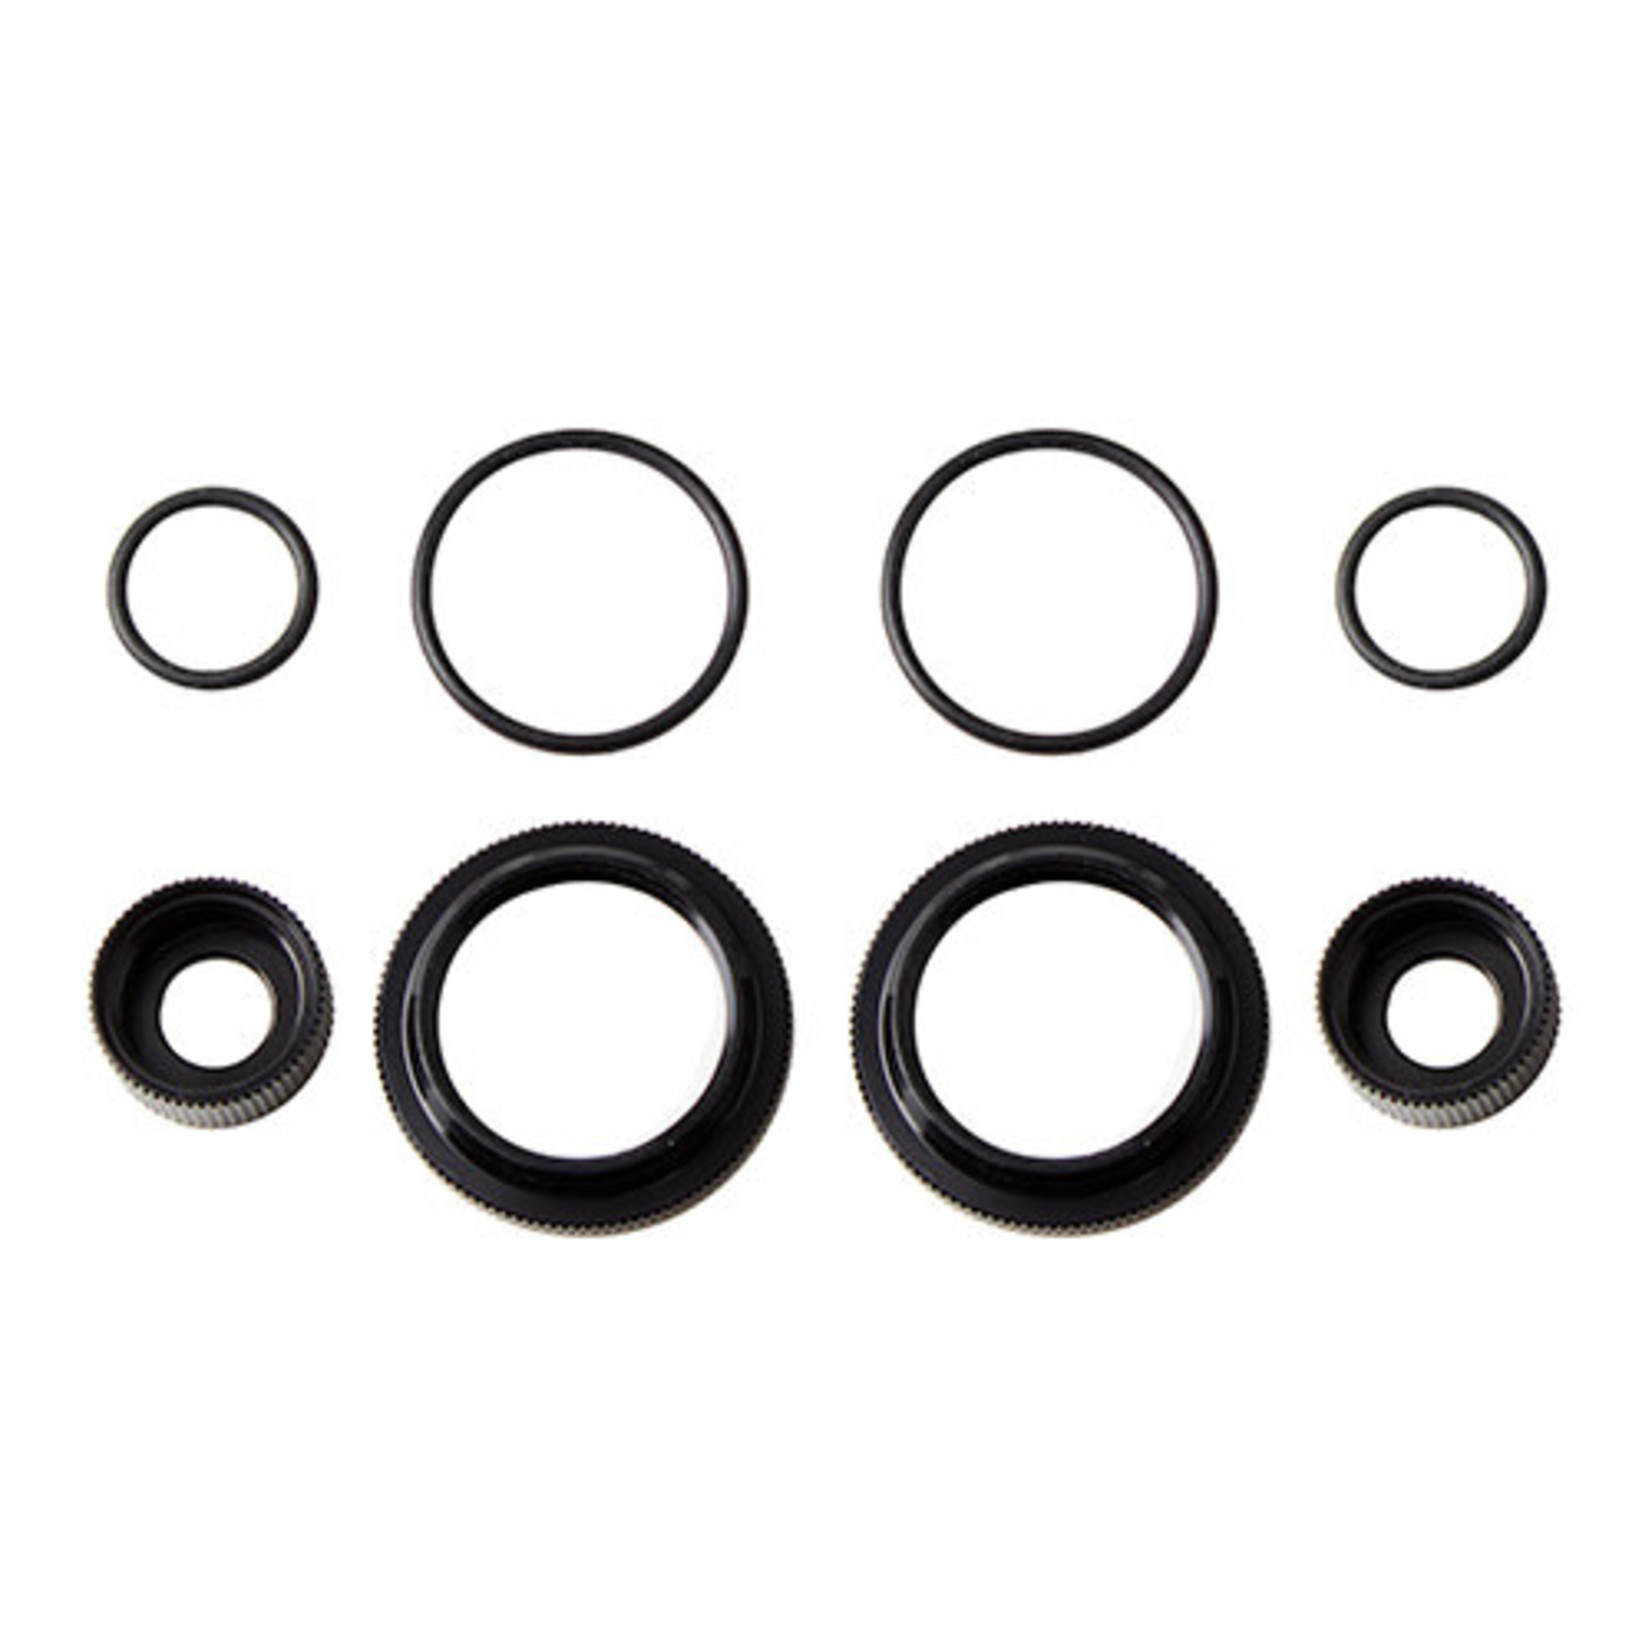 Team Associated ASC91909 Associated 12mm Shock Collar & Seal Retainer Set (Black)